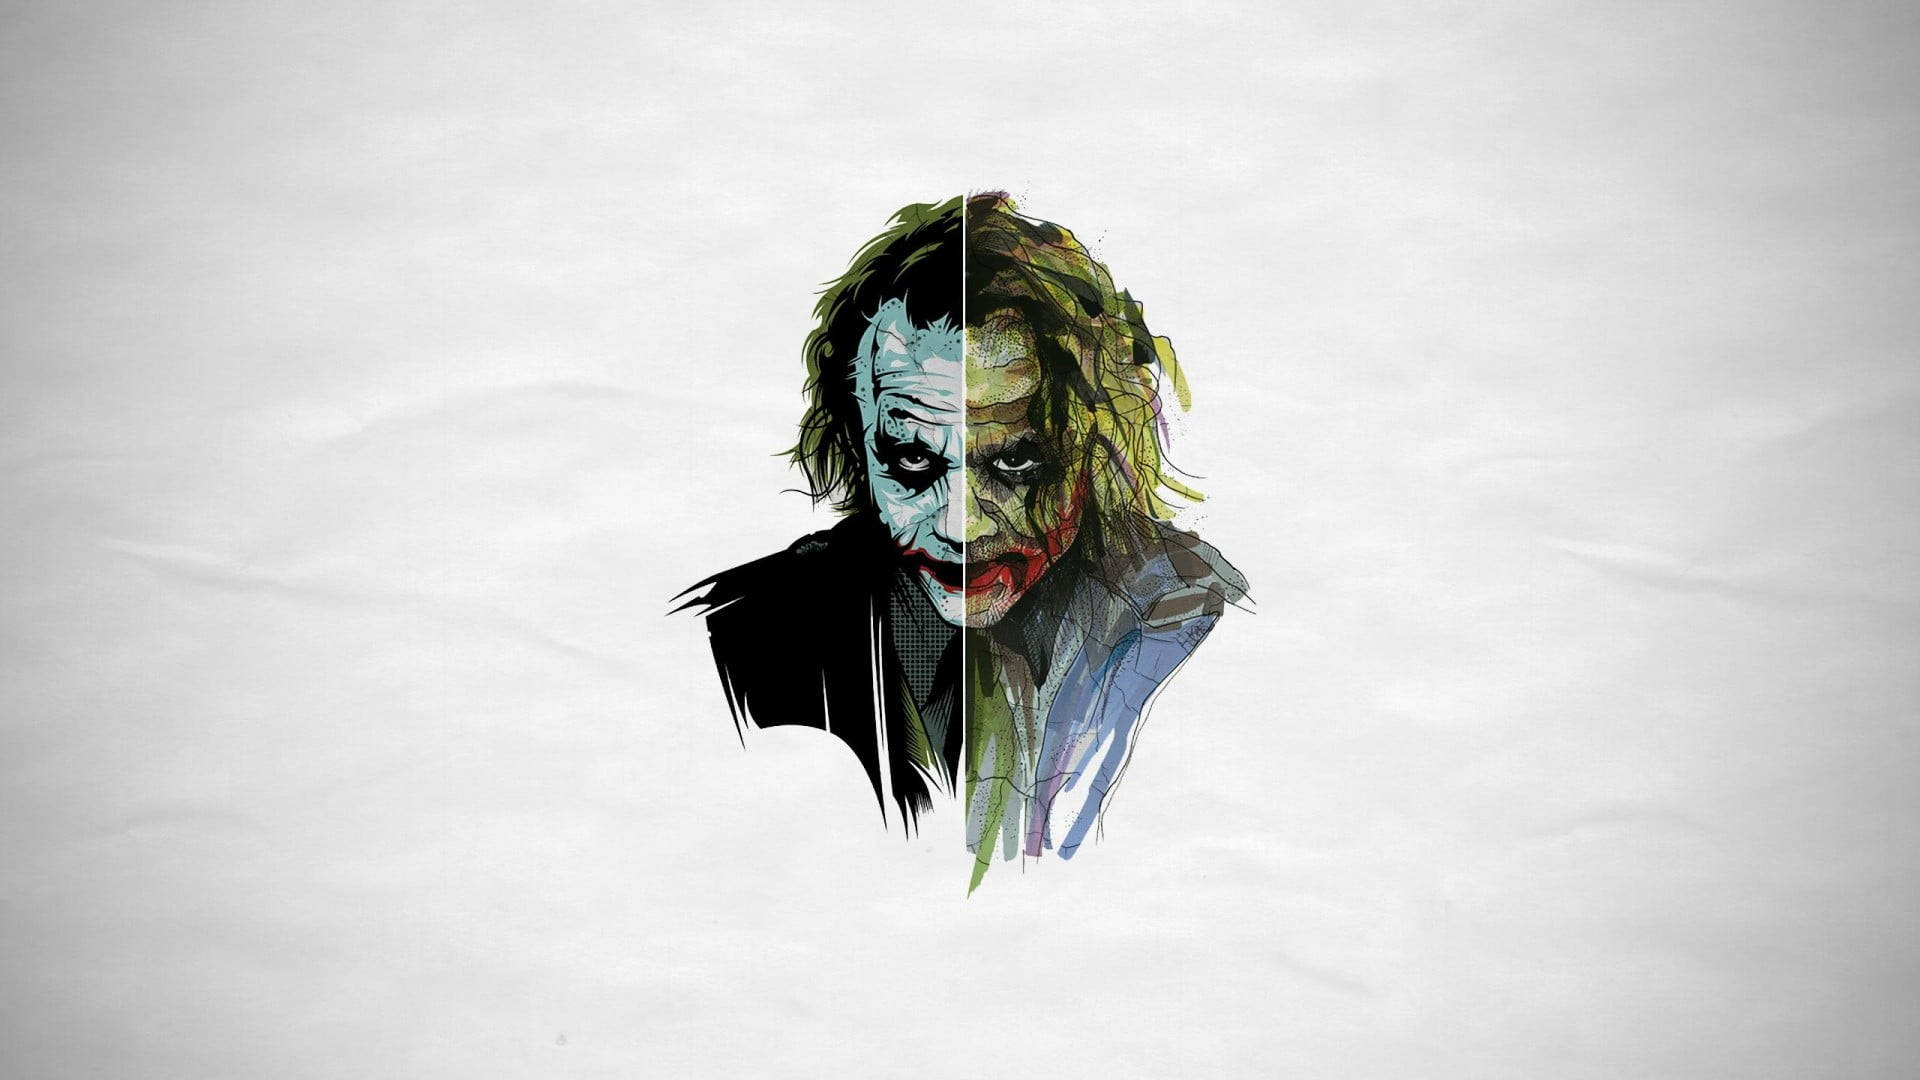 Free Heath Ledger Joker Wallpaper Downloads, [100+] Heath Ledger Joker  Wallpapers for FREE 